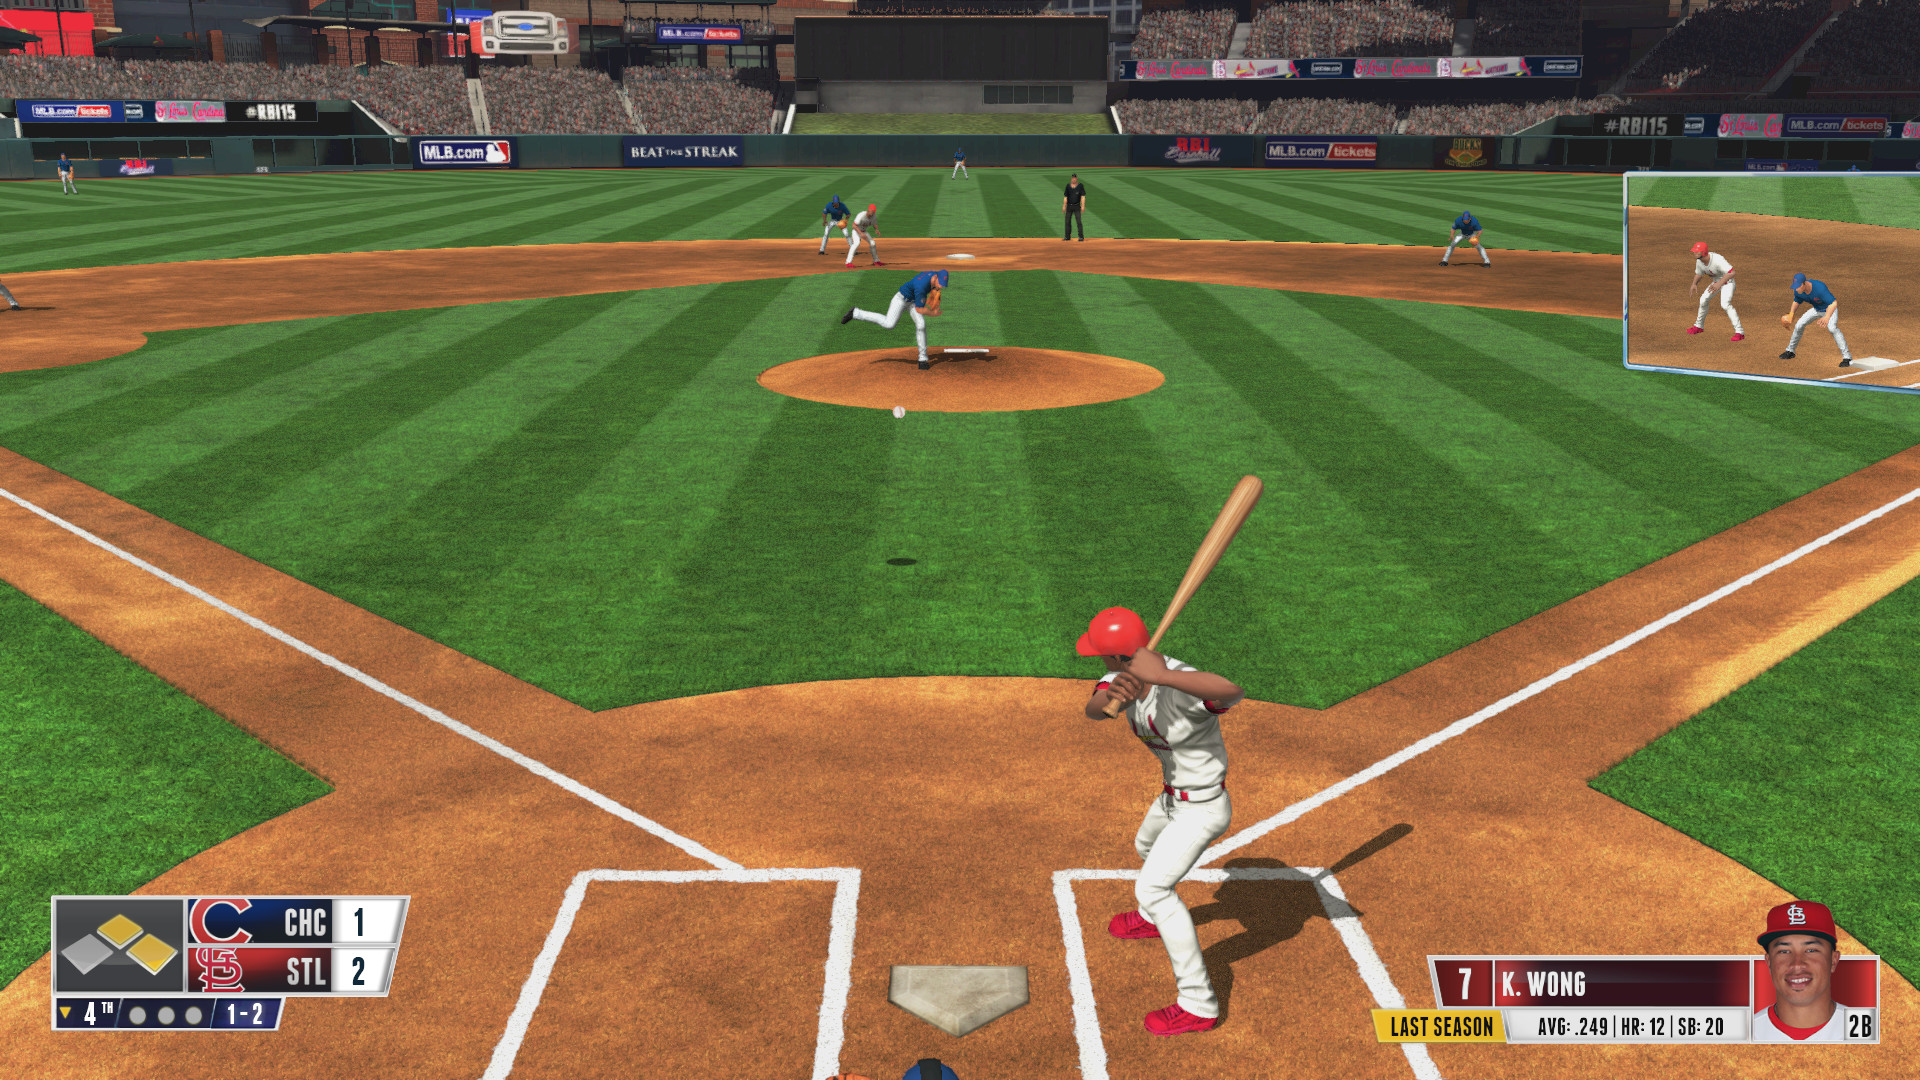 R.B.I. Baseball 15 on Steam